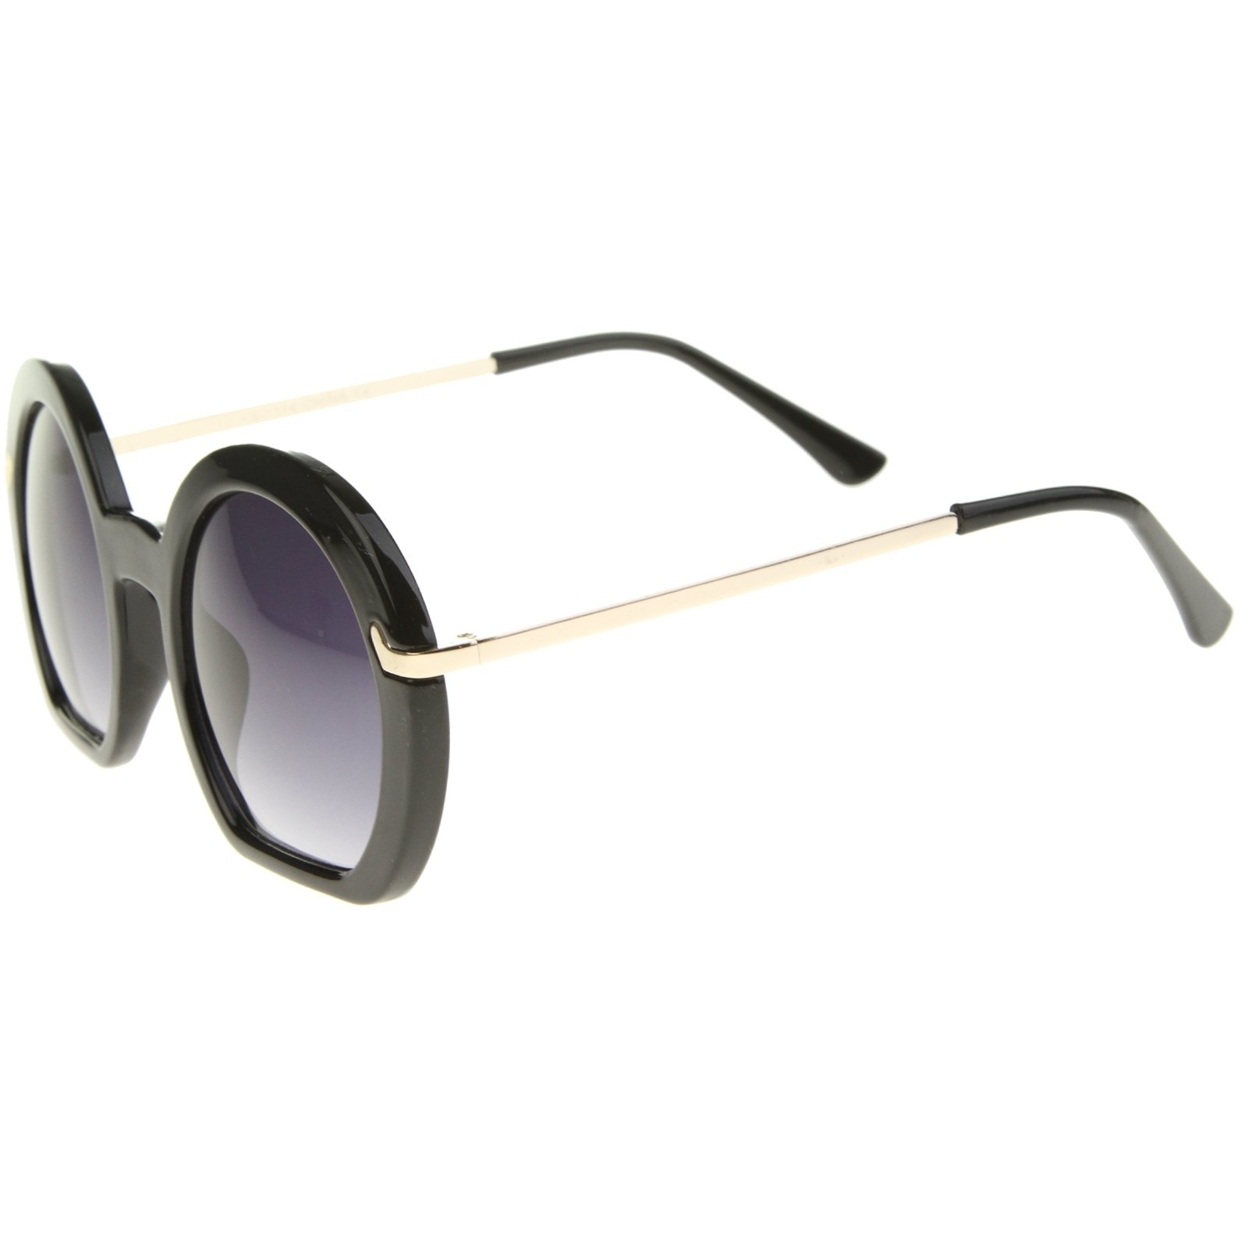 Women's High Fashion Flat Bottom Oversize Round Sunglasses 50mm - Tortoise / Amber